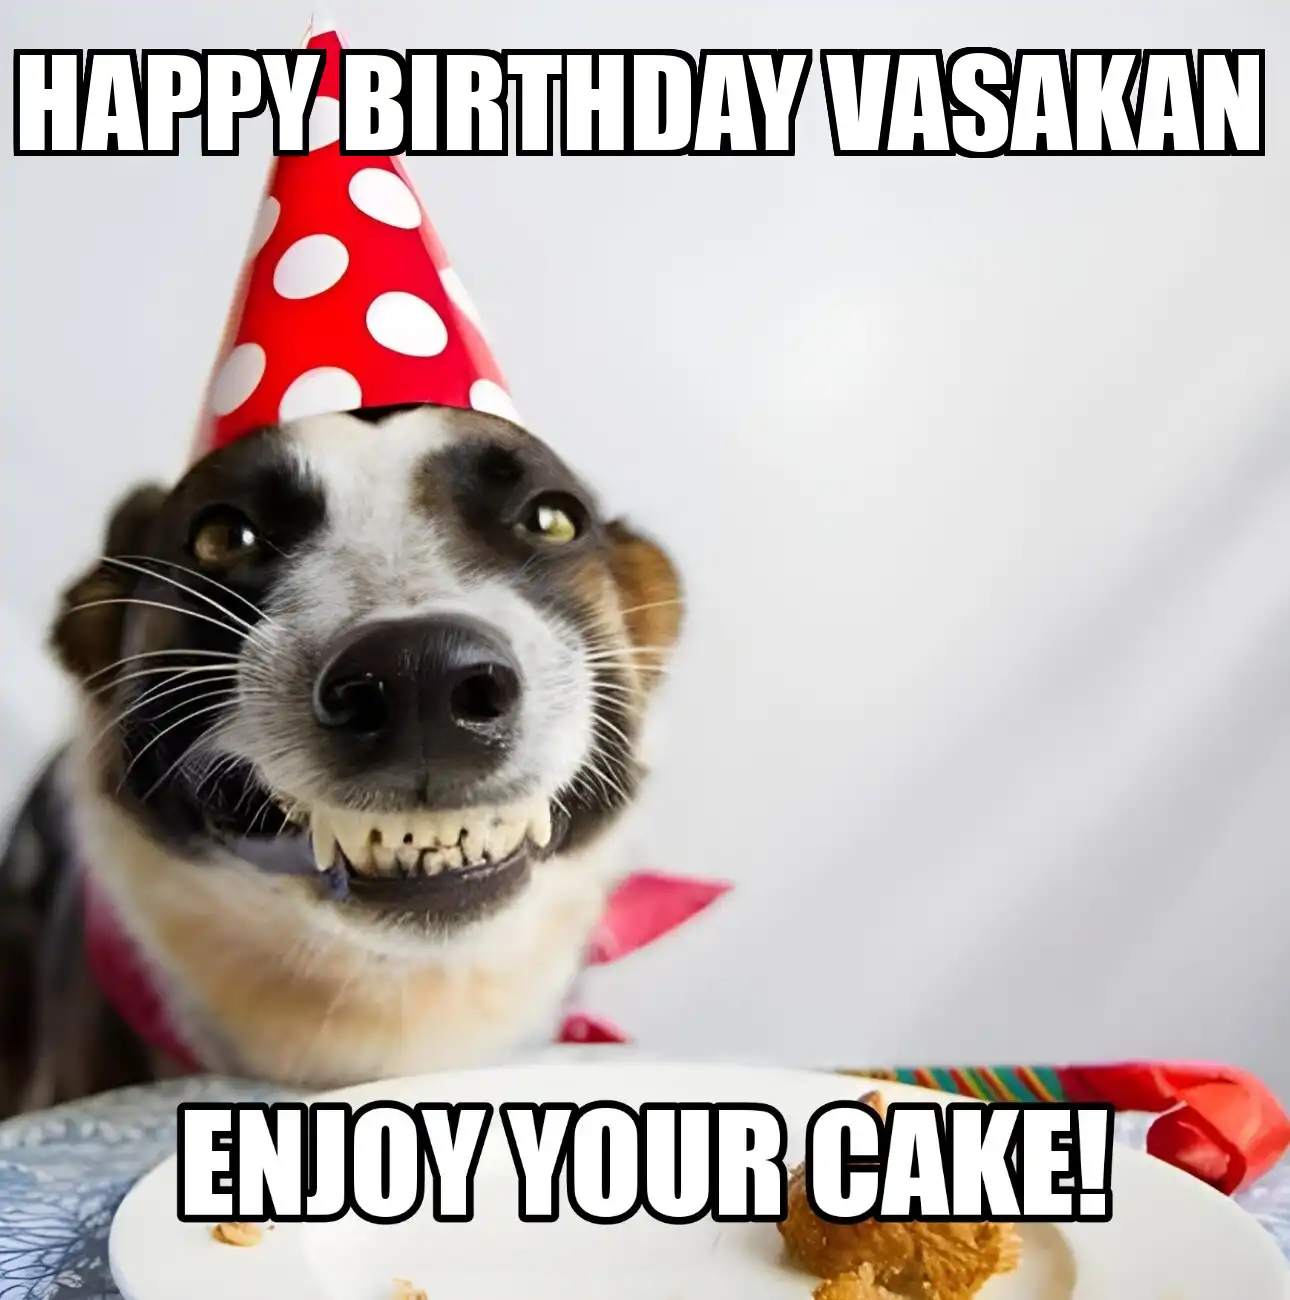 Happy Birthday Vasakan Enjoy Your Cake Dog Meme